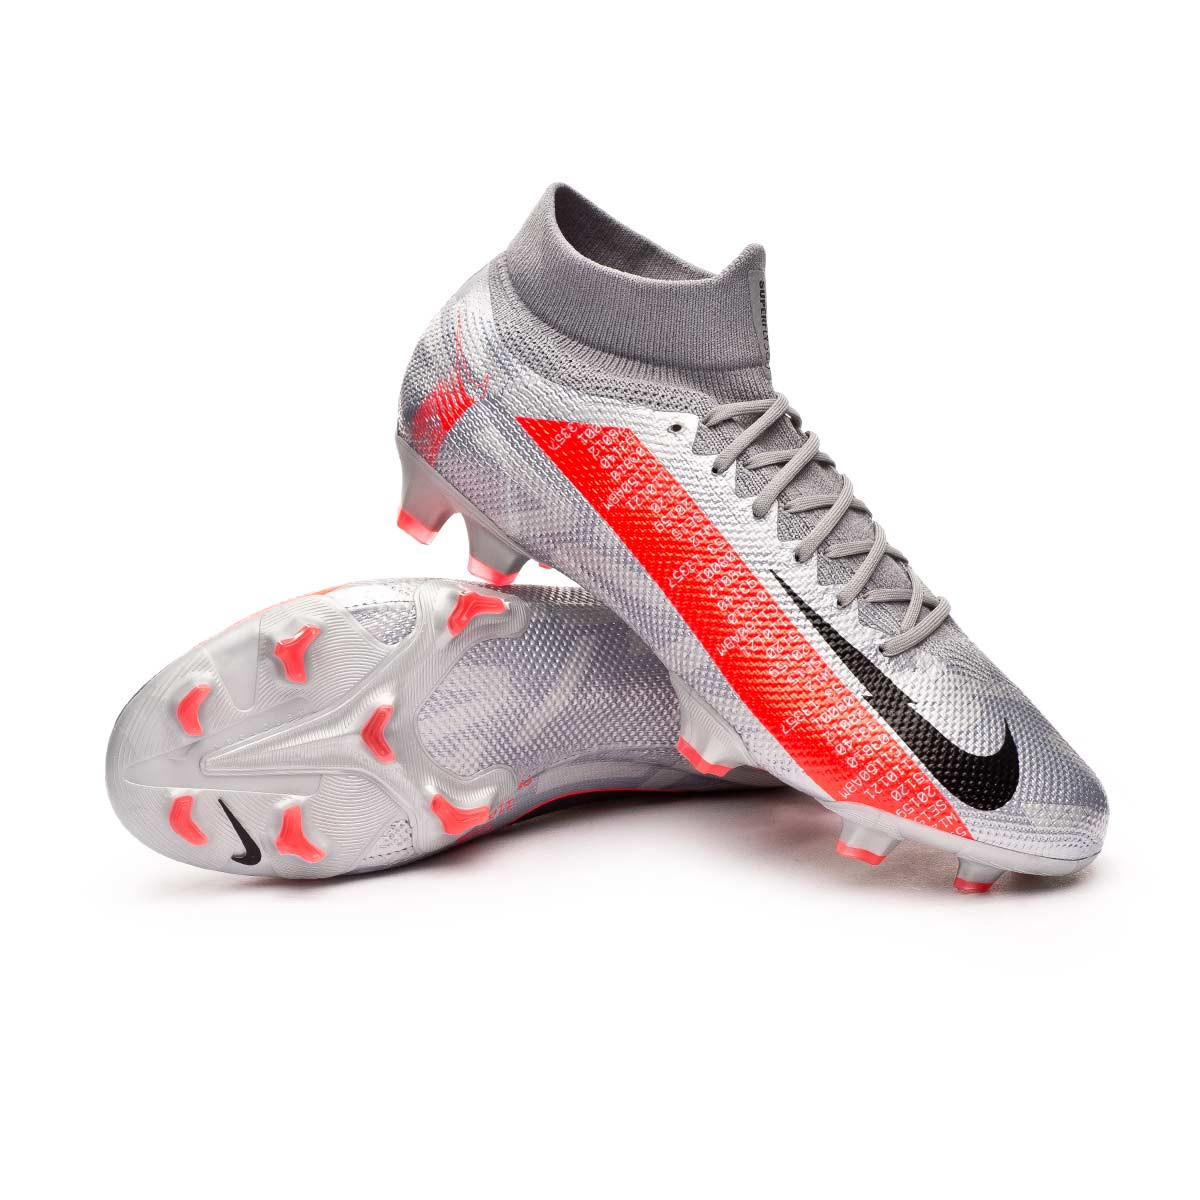 Chaussure de foot Nike Mercurial Superfly VII Pro FG Metallic ...